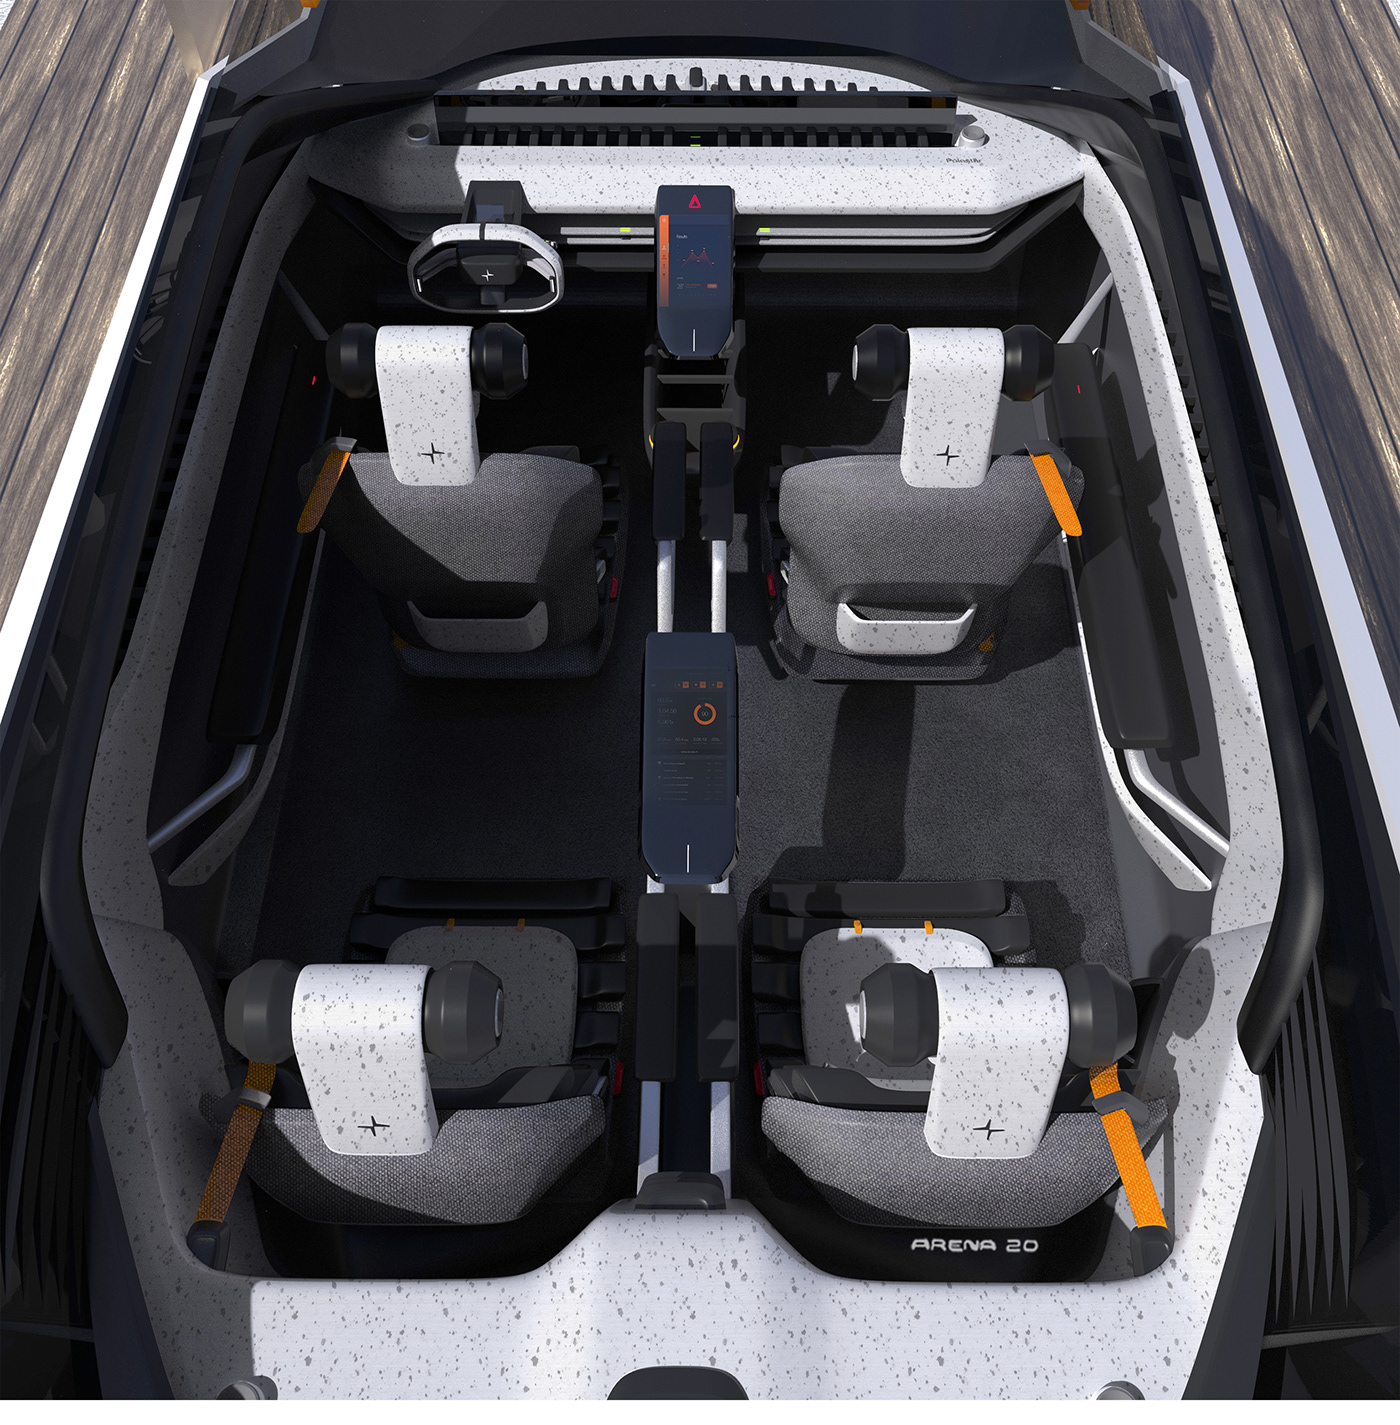 3D advanced automotive   cardesign concept design industrial Polestar product Volvo